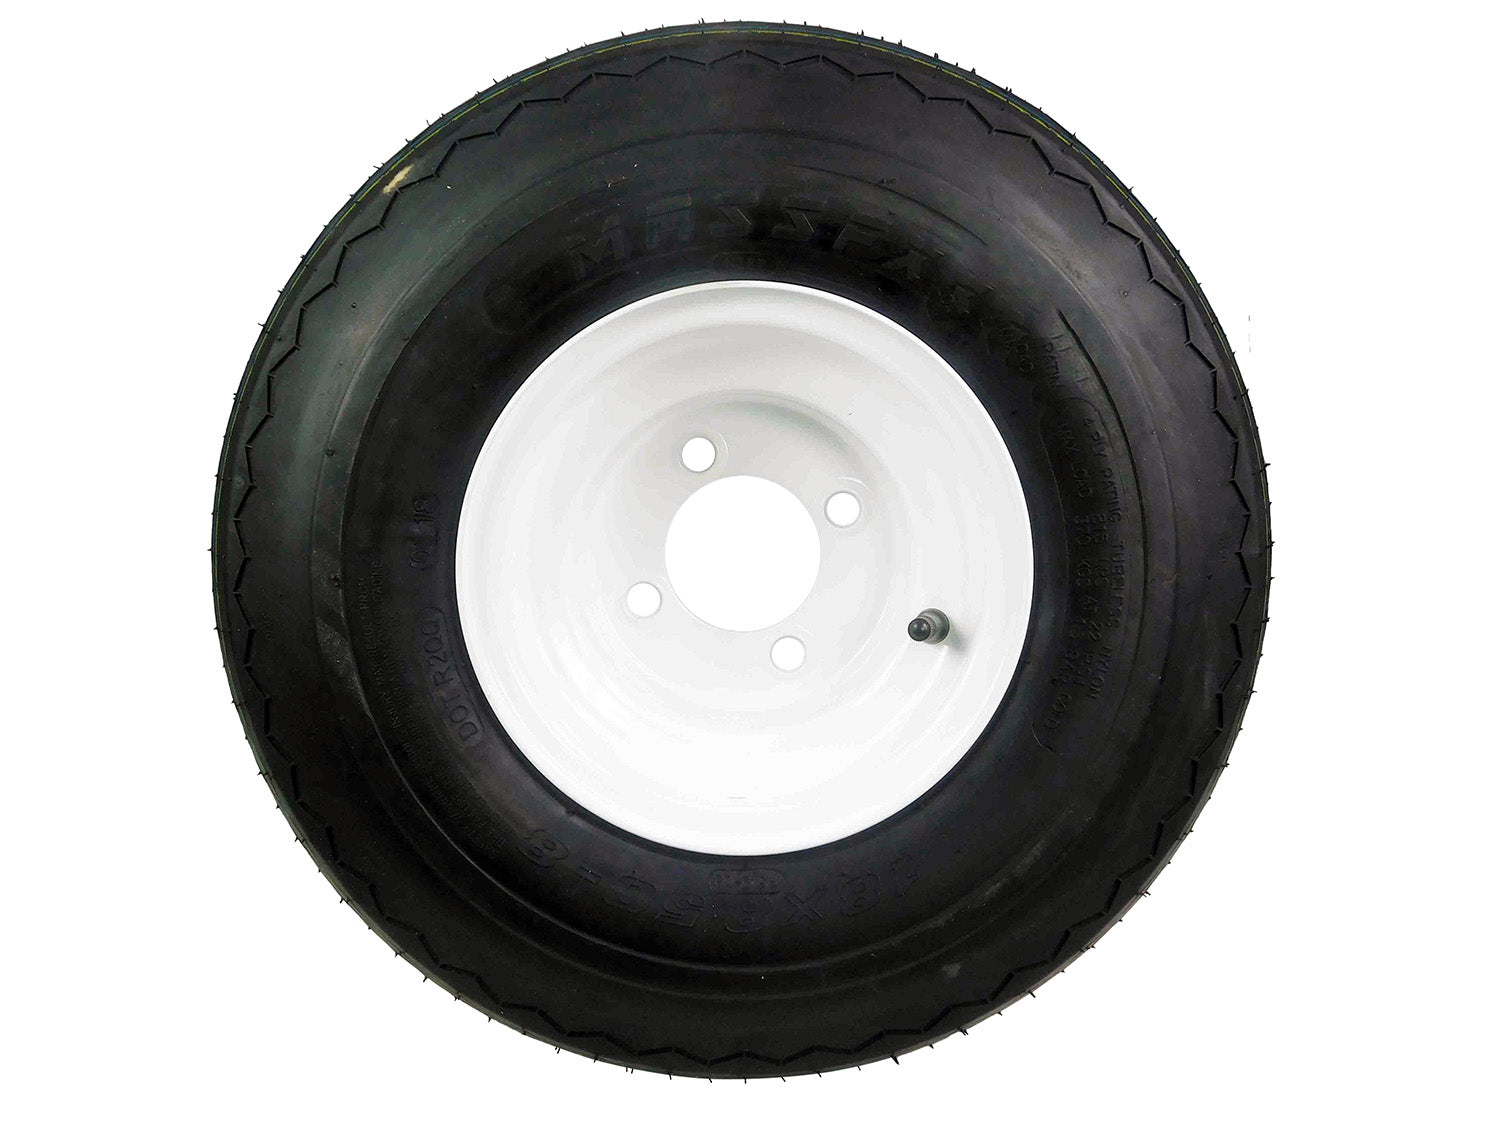 MASSFX Wheel and Tire Combo 18x8.5-8 Golf Cart Tire White 4/4 Rim